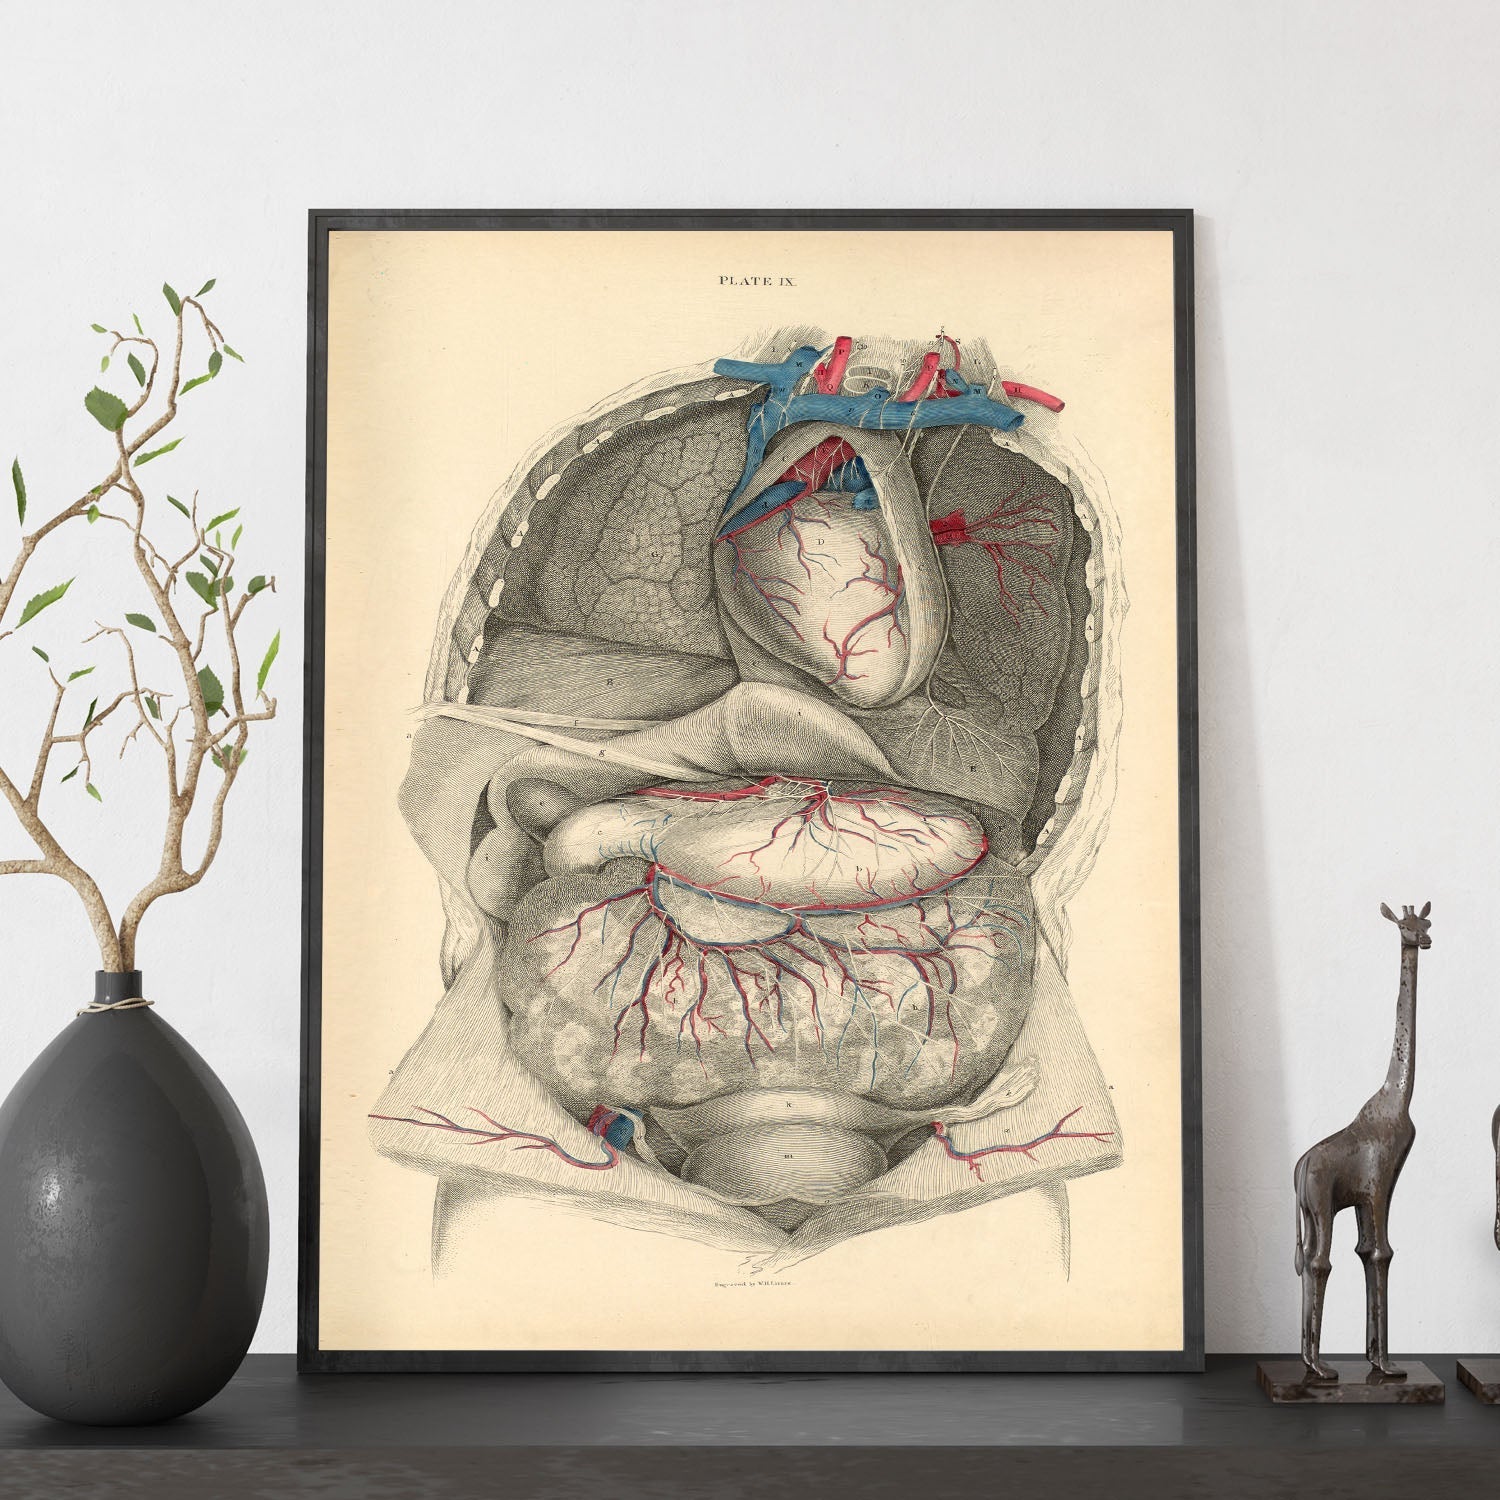 Dissection of the thorax and abdomen-Artwork-Nacnic-Nacnic Estudio SL